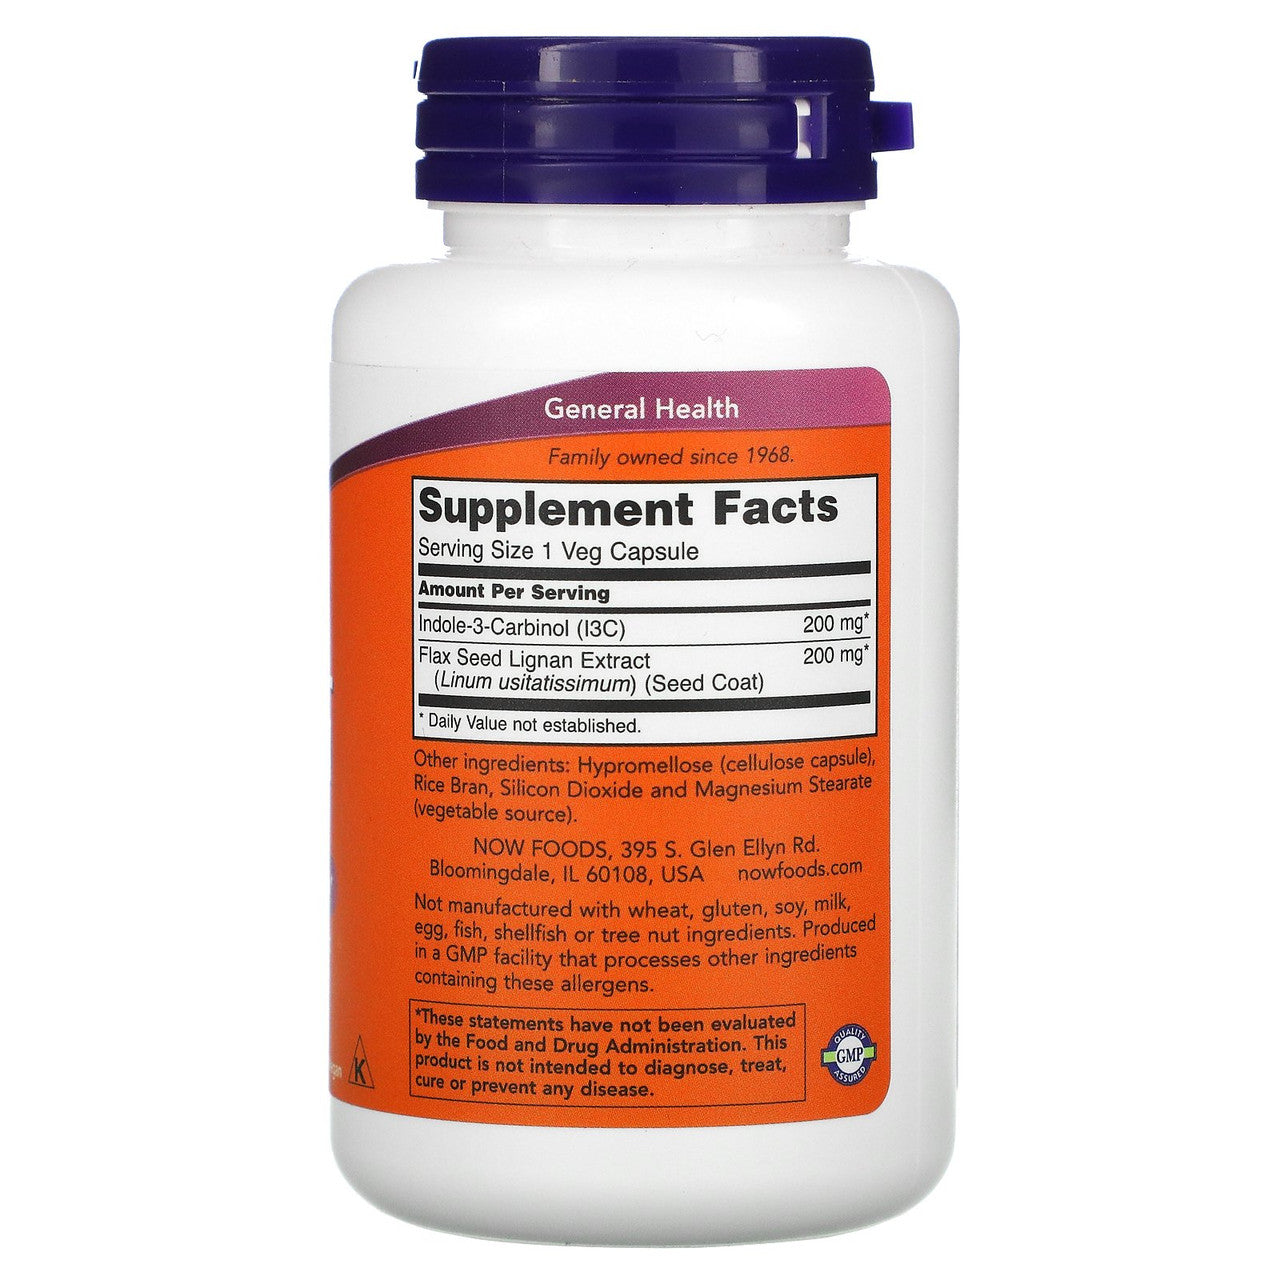 Now Indole-3-Carbinol Supplement Facts Label